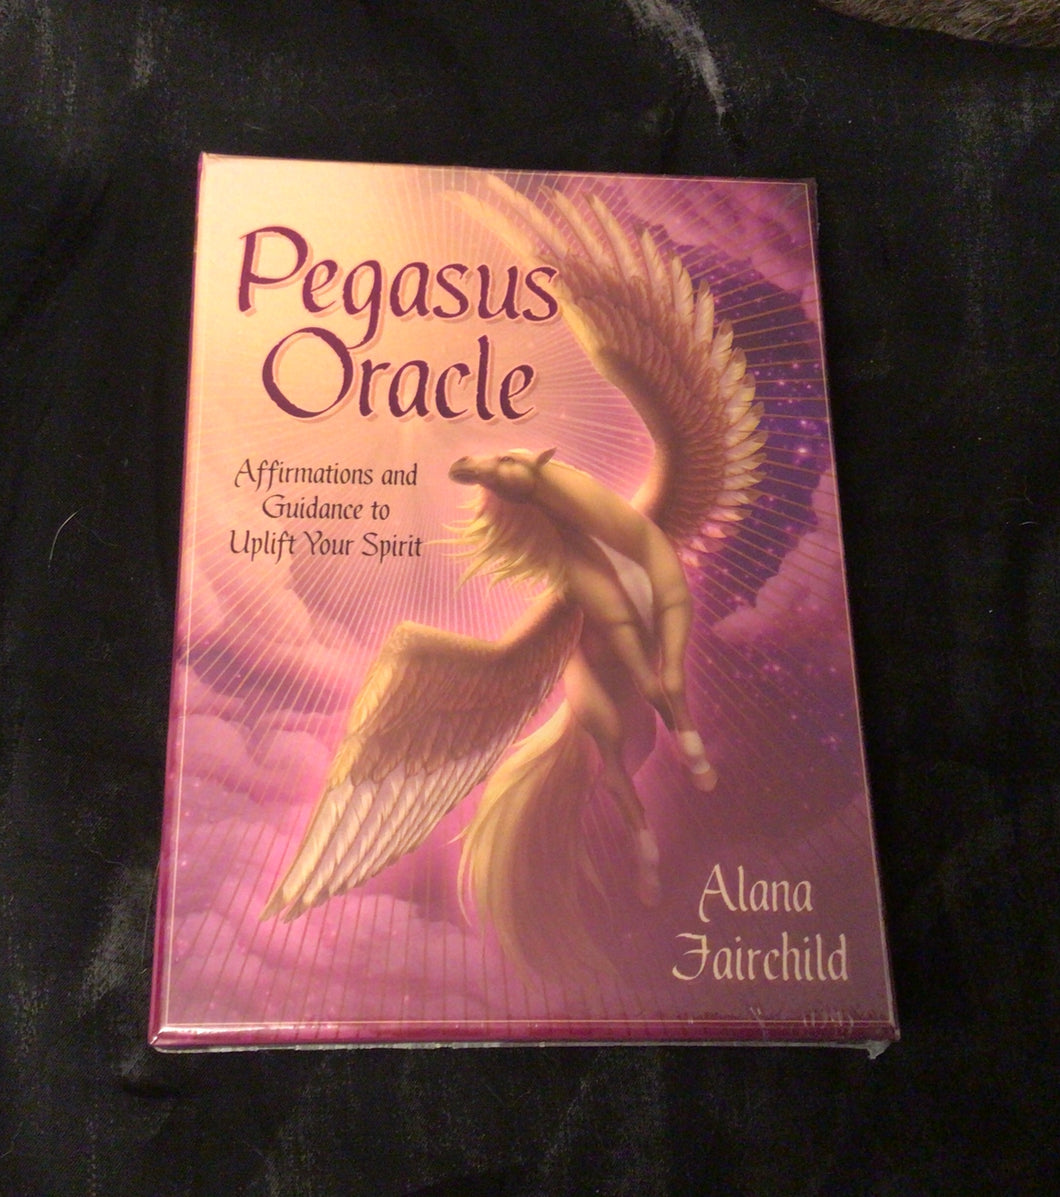 Pegasus Oracle